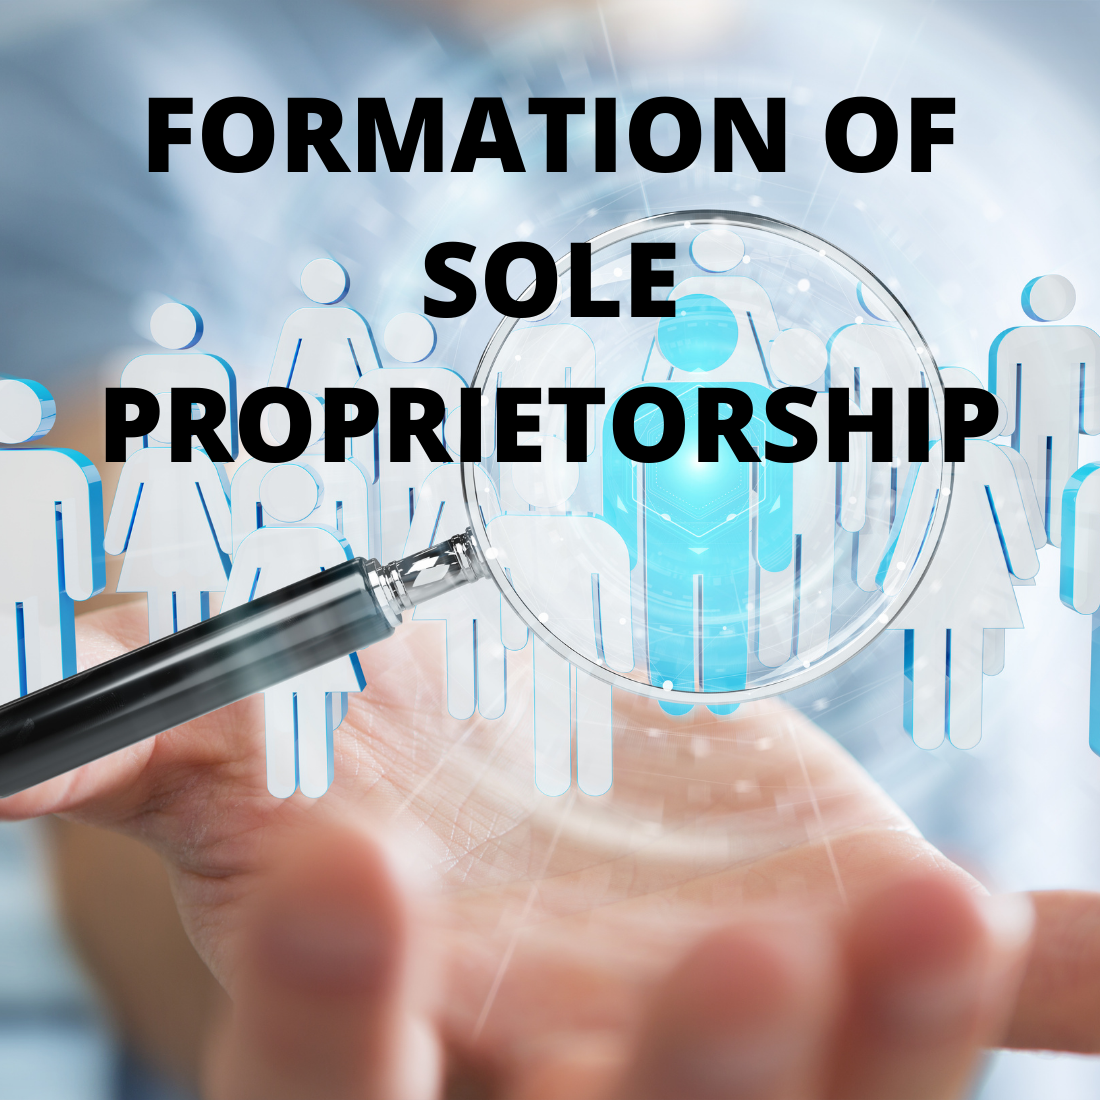 Formation of Sole proprietorship